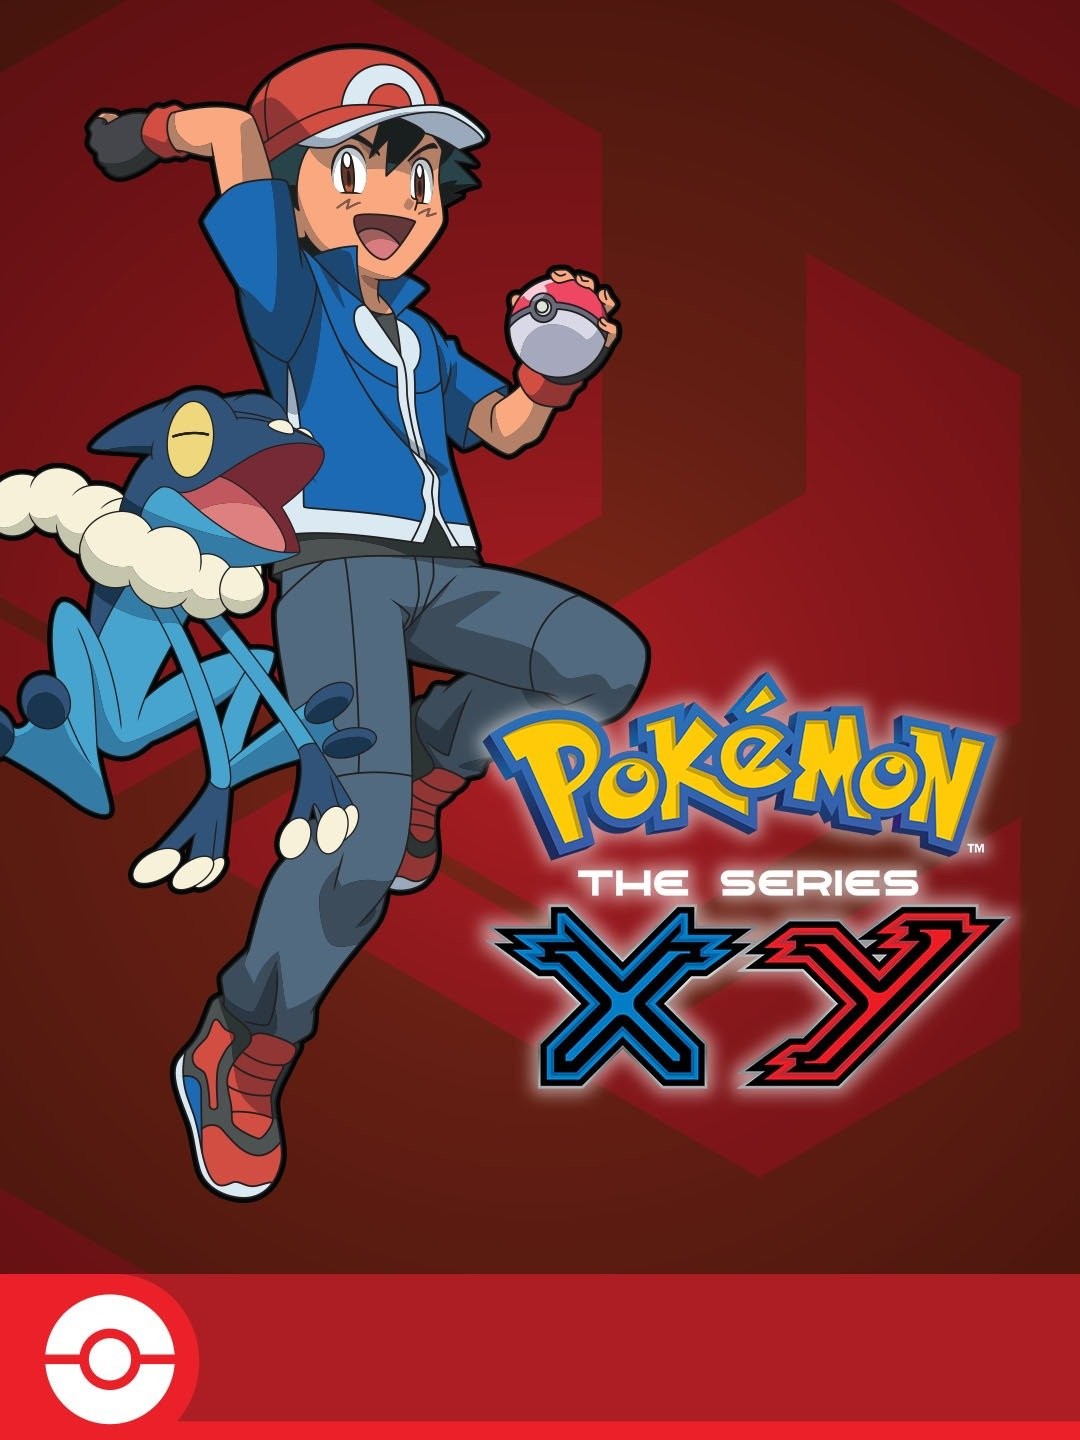 Pokémon XY: Kalo Quest chega em setembro na Netflix